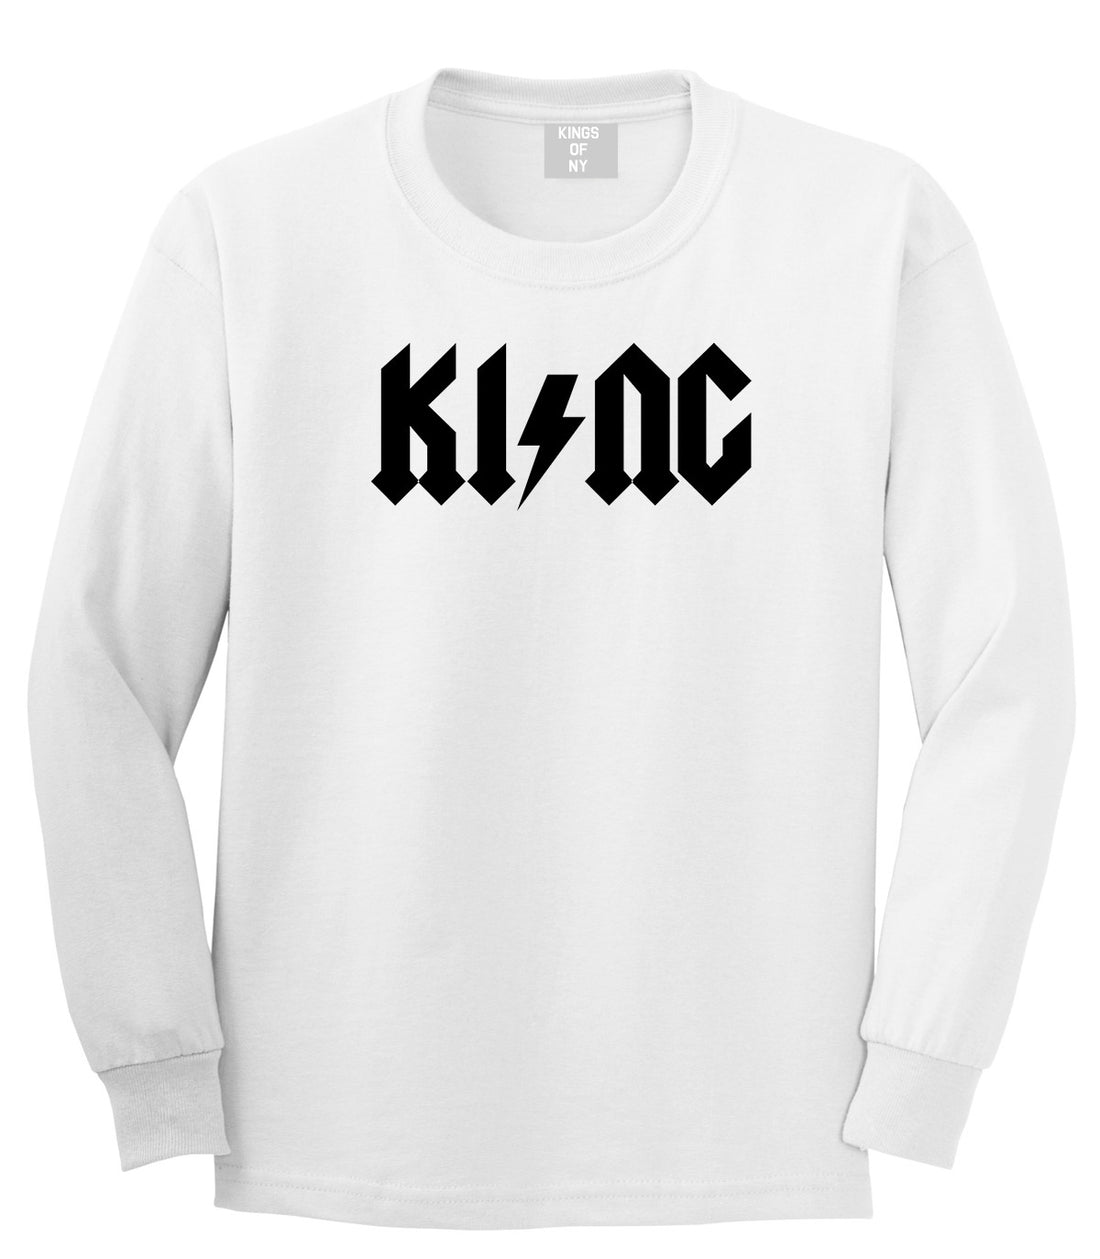 KI NG Music Parody Long Sleeve T-Shirt in White